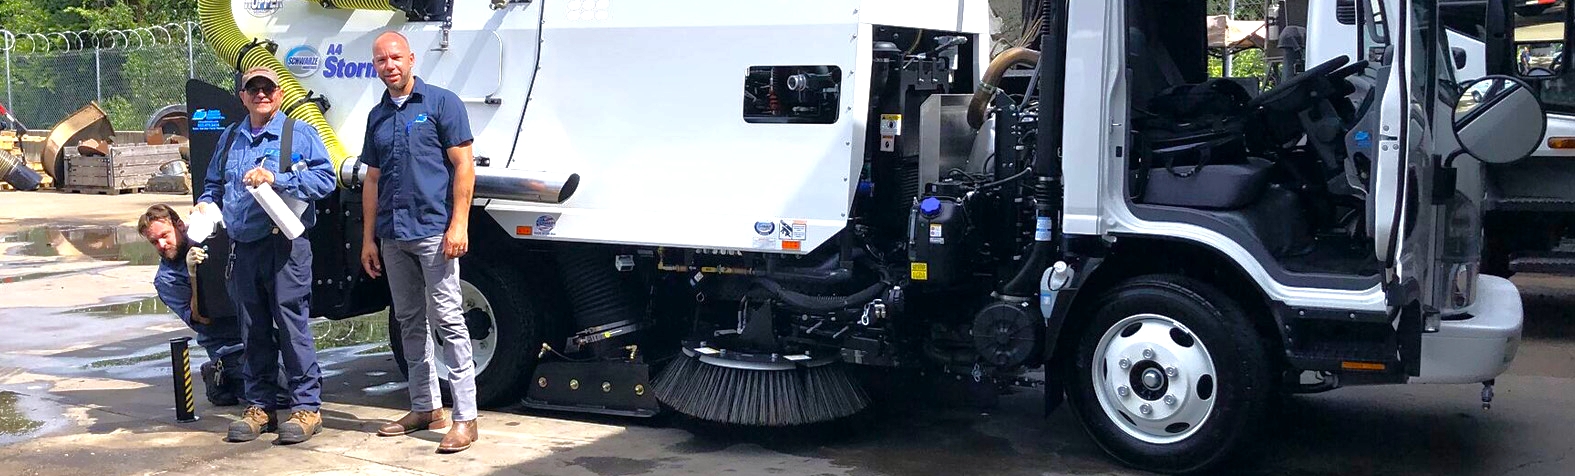 Street Sweeper Sewer Vac Truck Scrubber Sweeper Service Maintenance Repairs PM- Carolina Industrial Equipment